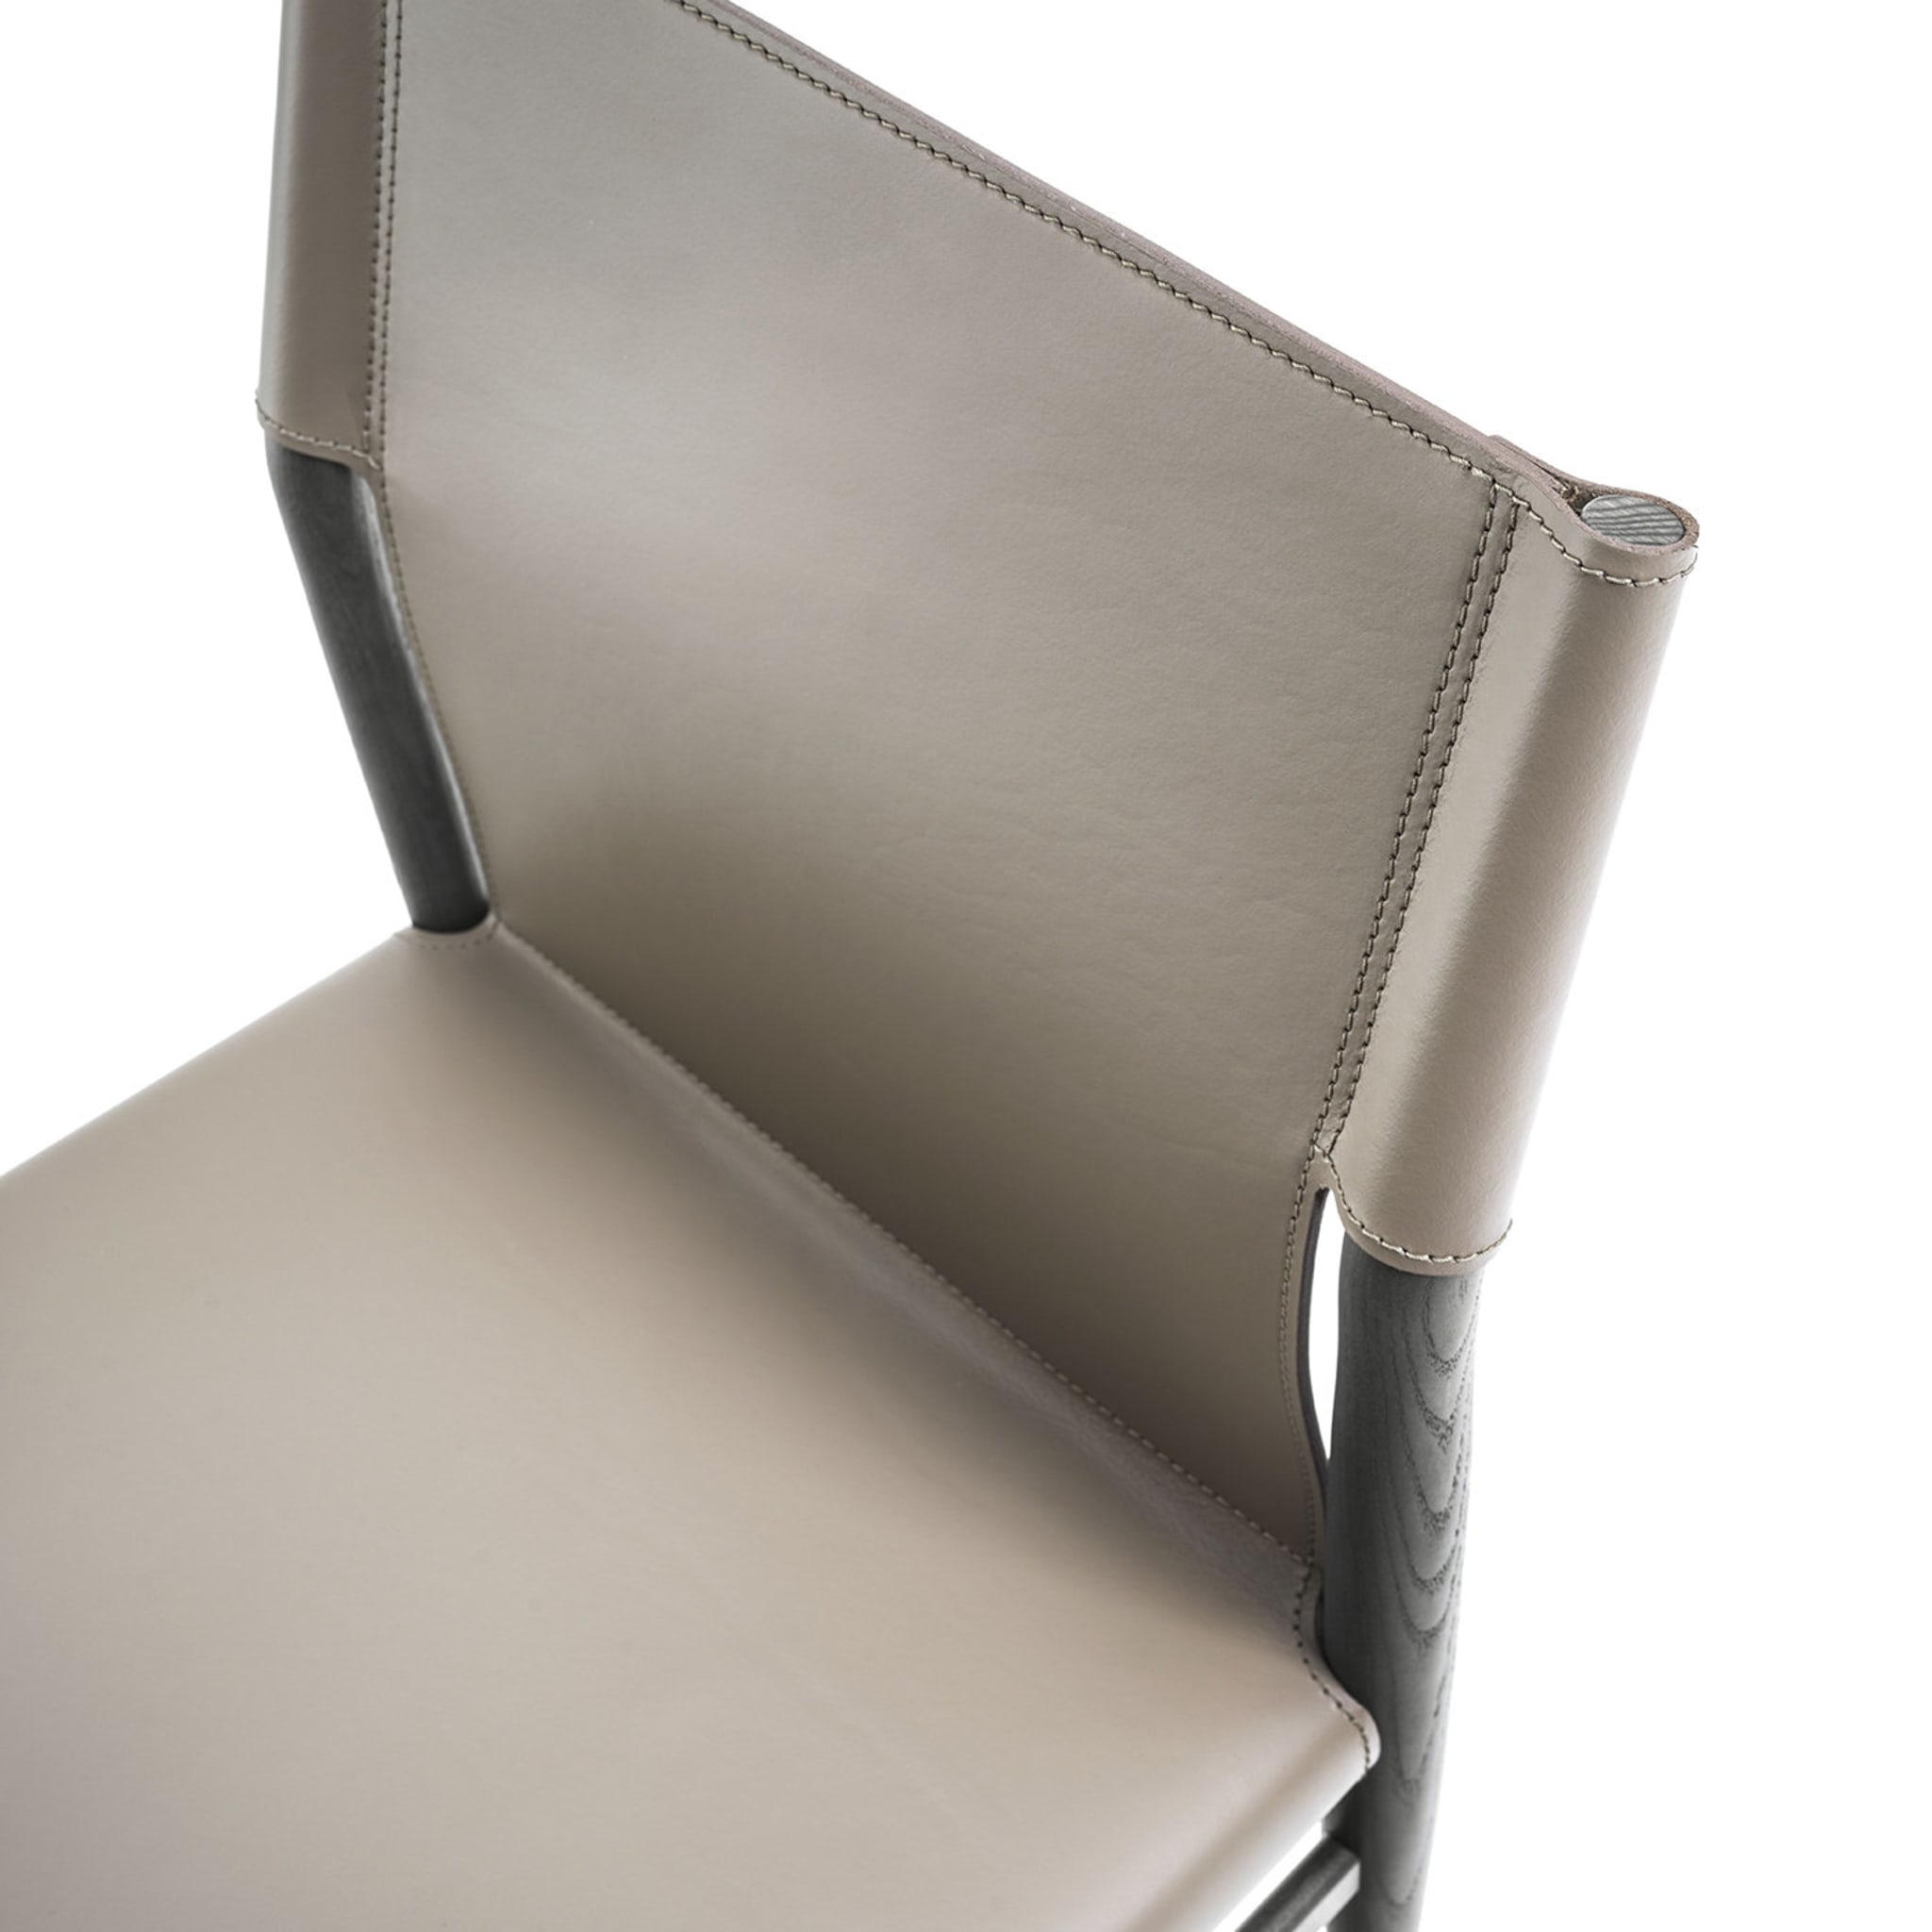 Ledermann Chair #2 by Tom Kelley - Alternative view 1